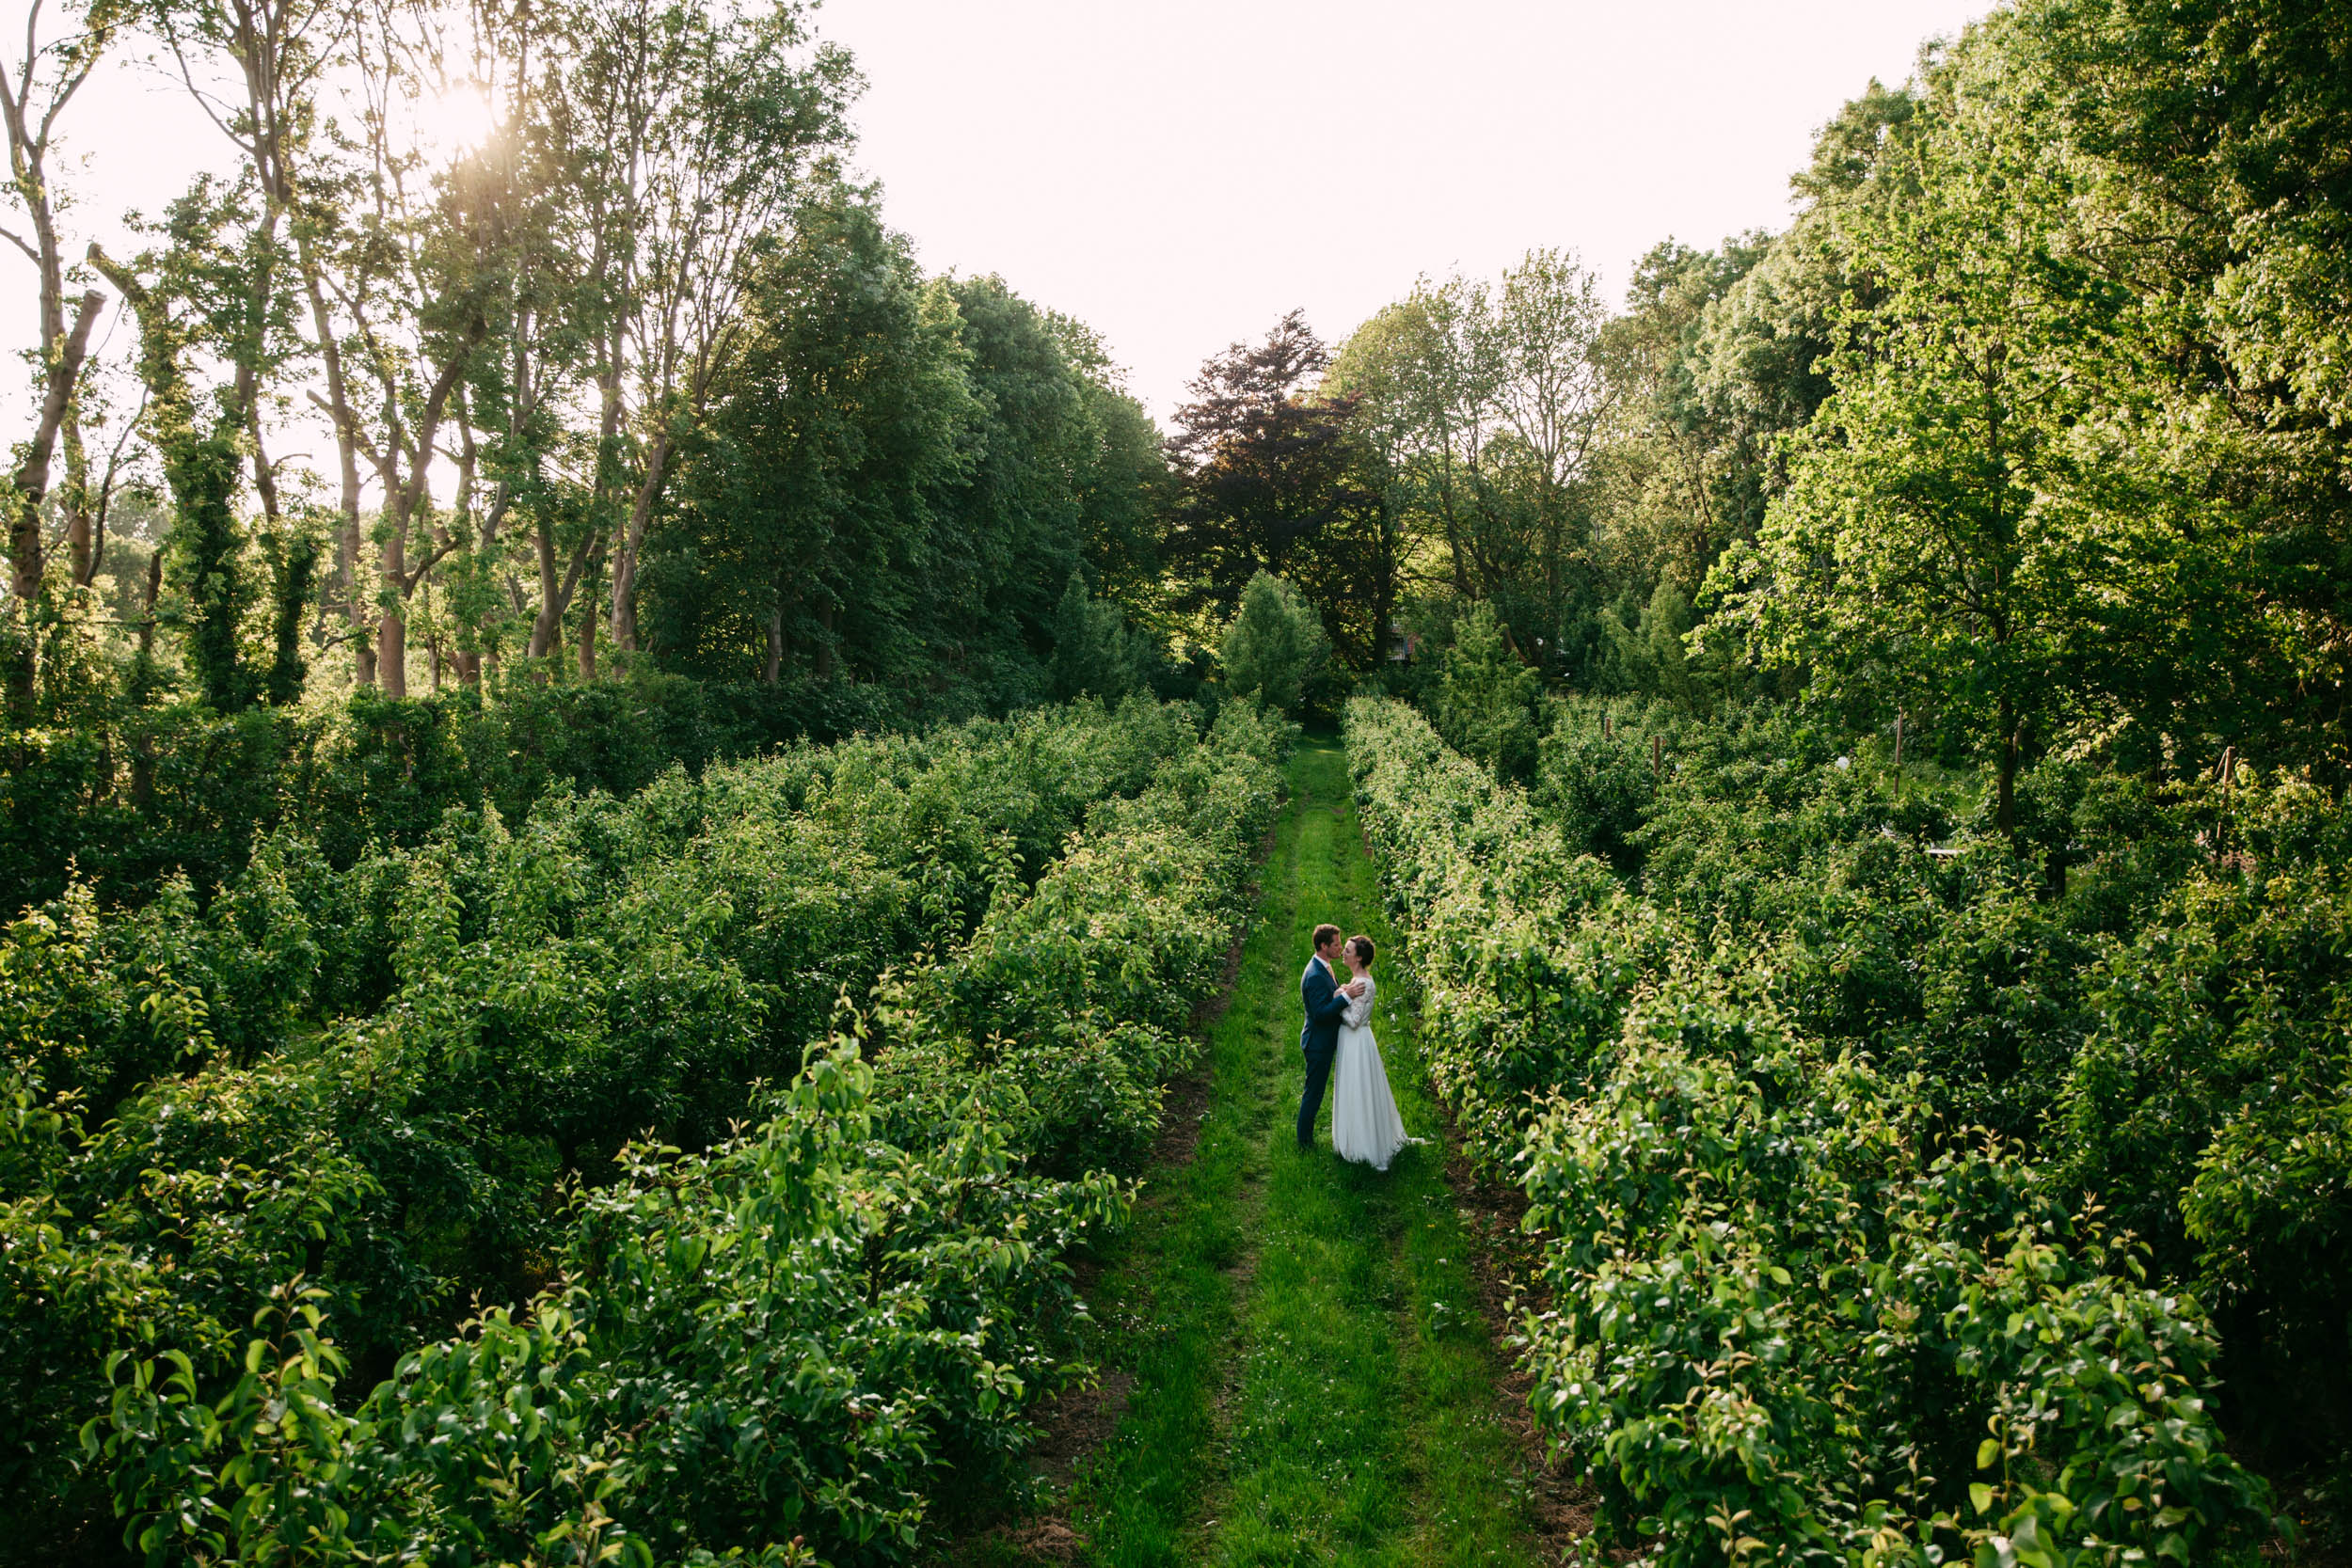 A bride and groom stroll through Landgoed de Olmenhorst, an enchanting orchard.